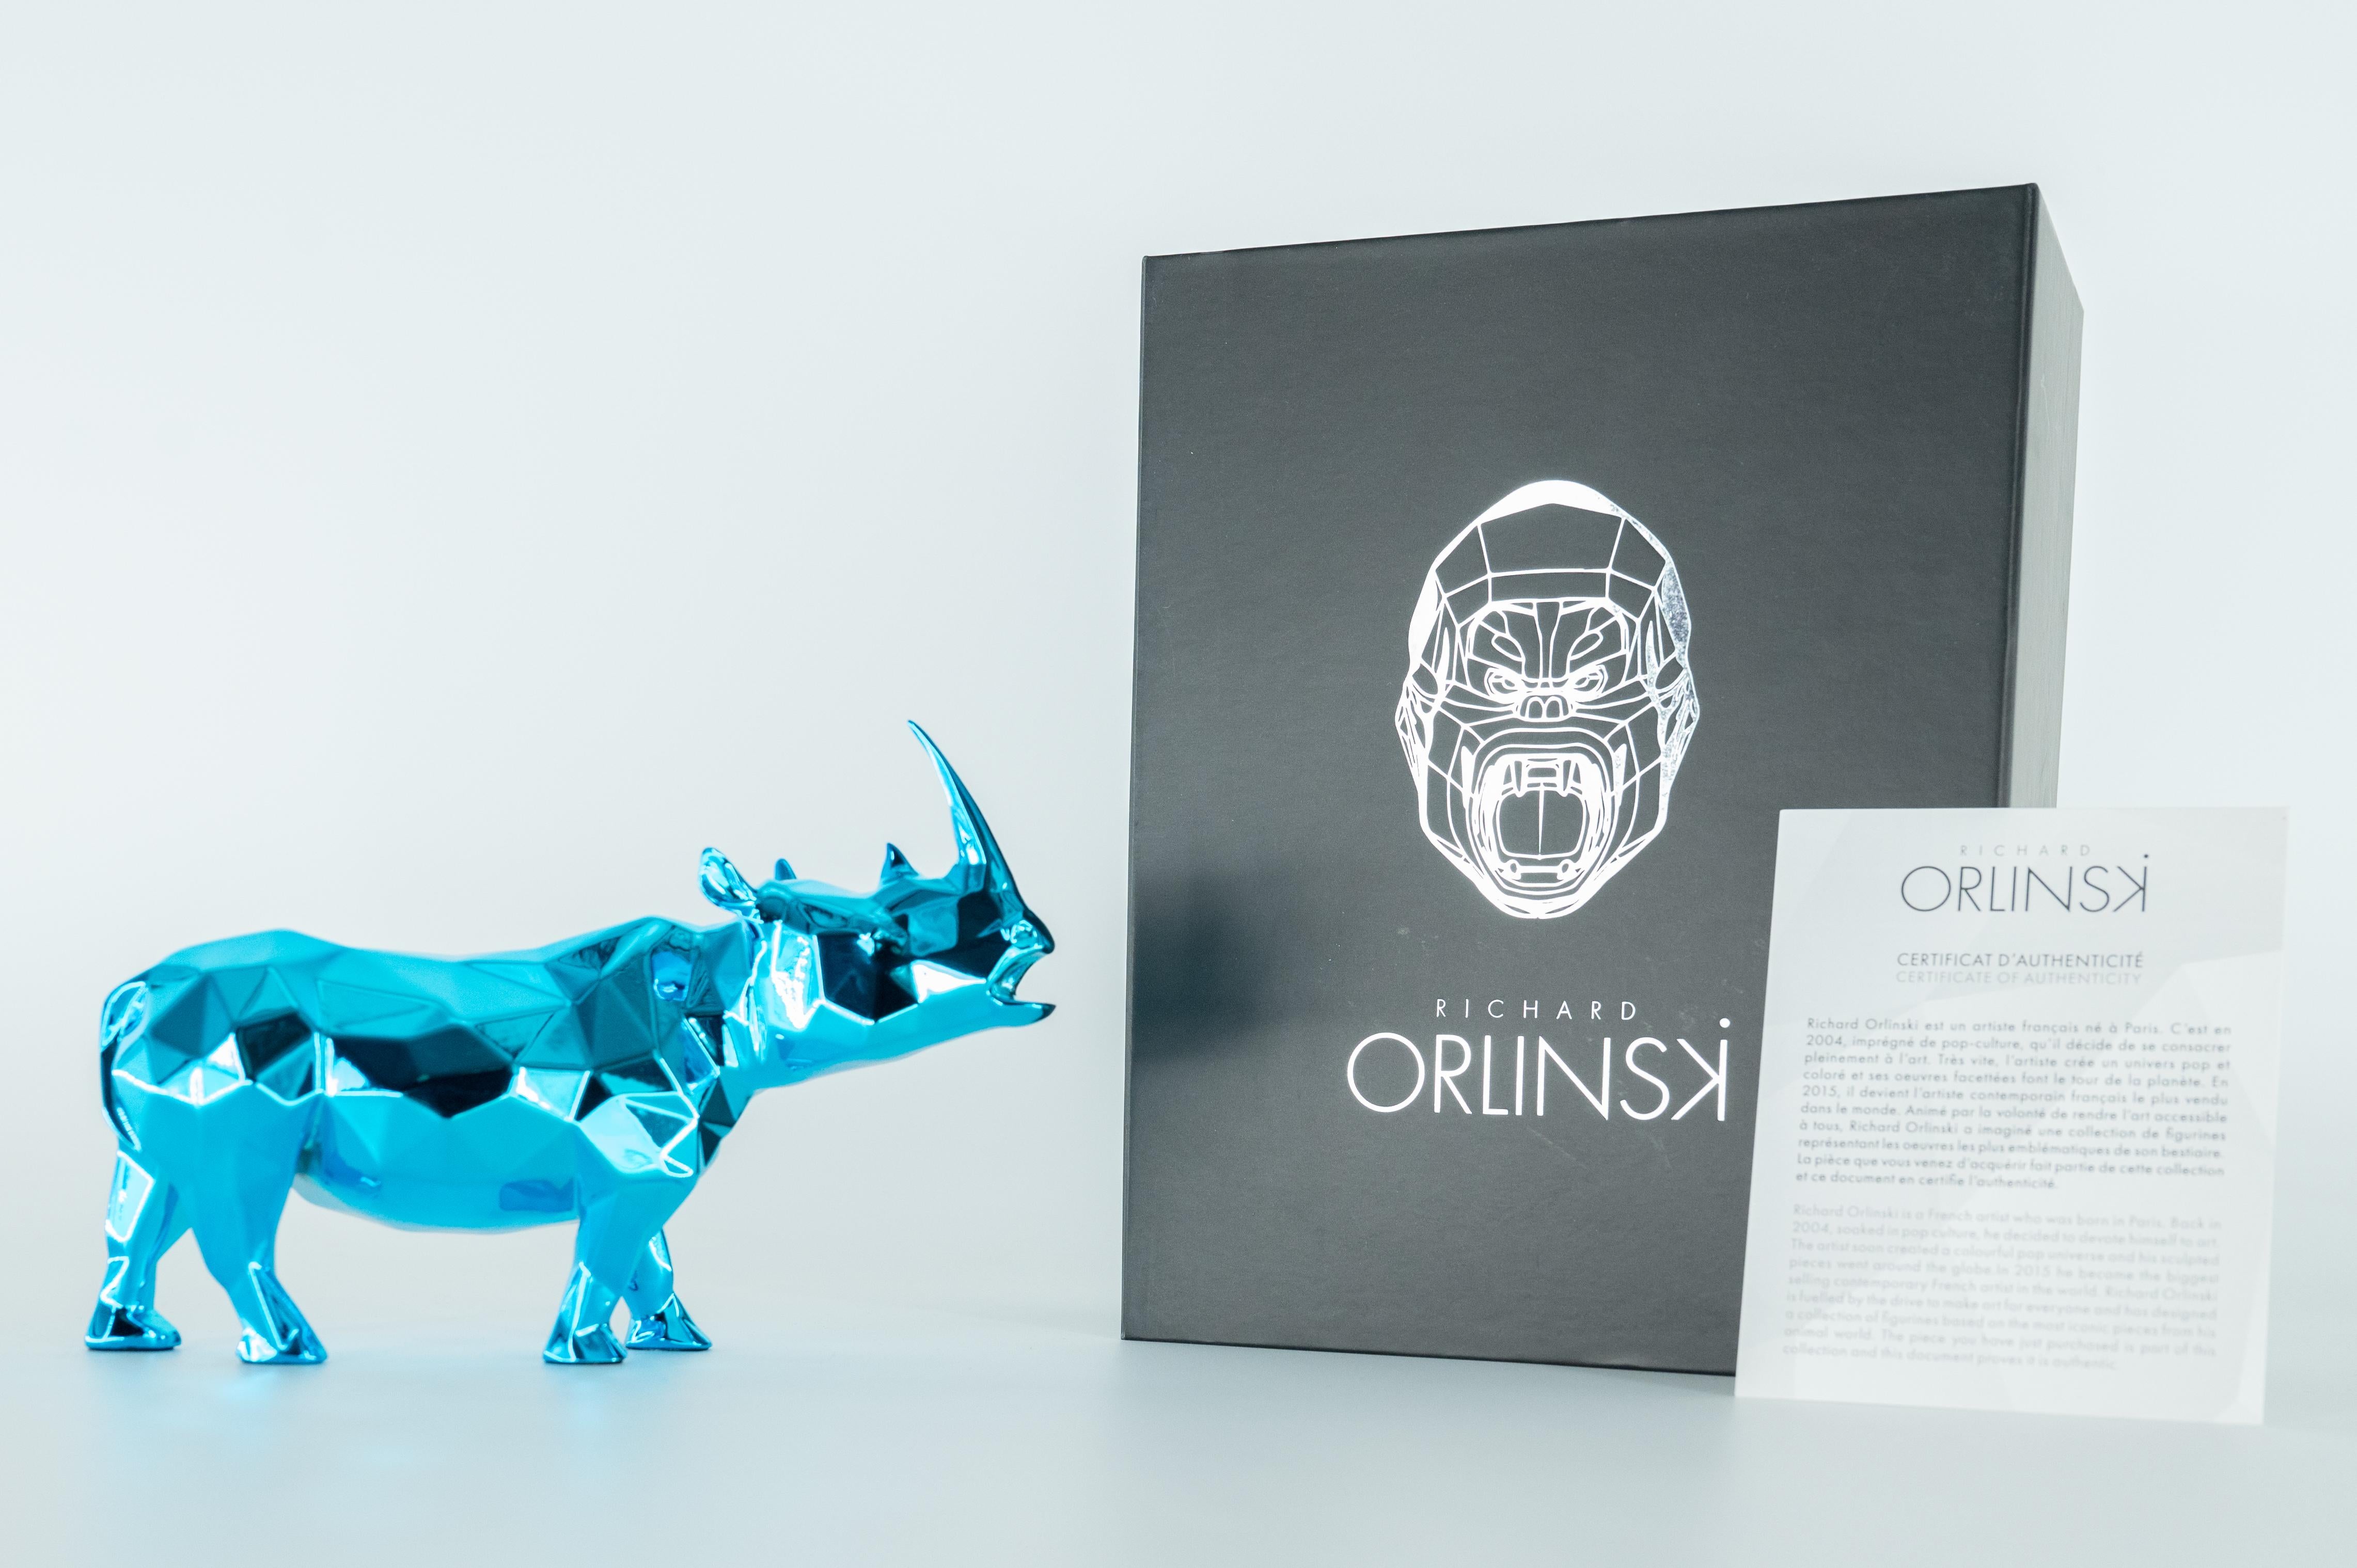 Richard ORLINSKI
Rhino Spirit (Azur Edition)

Sculpture in resin
Metallic blue
About 10.5 x 15 x 4 cm (c. 4.1 x 5.9 x 1.5 in)
Presented in original box with certificate

Excellent condition